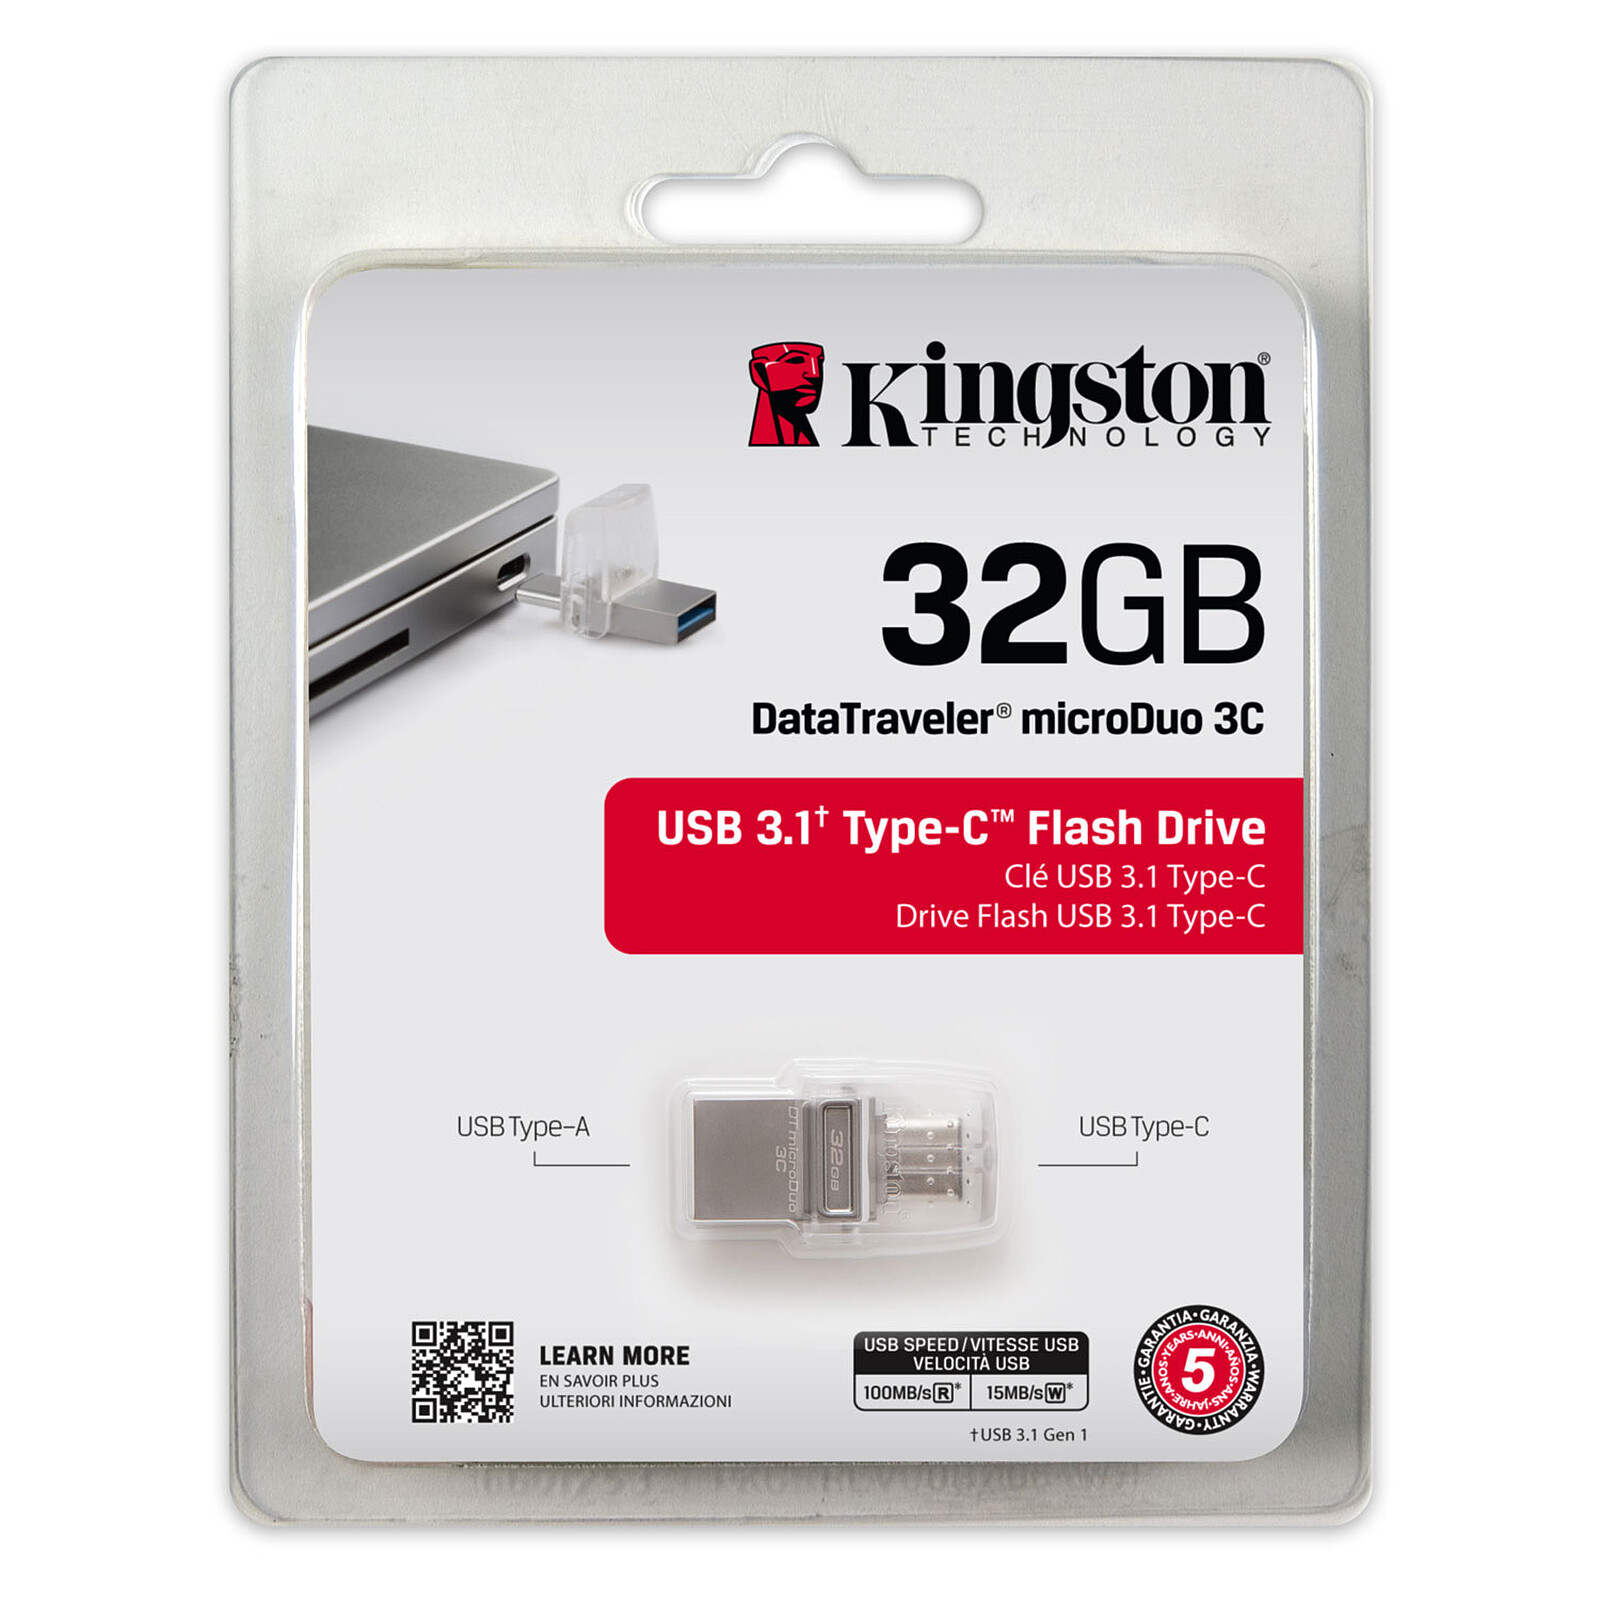 Kingston DataTraveler microDuo 3C 32GB - USB flash drive - LDLC 3-year  warranty